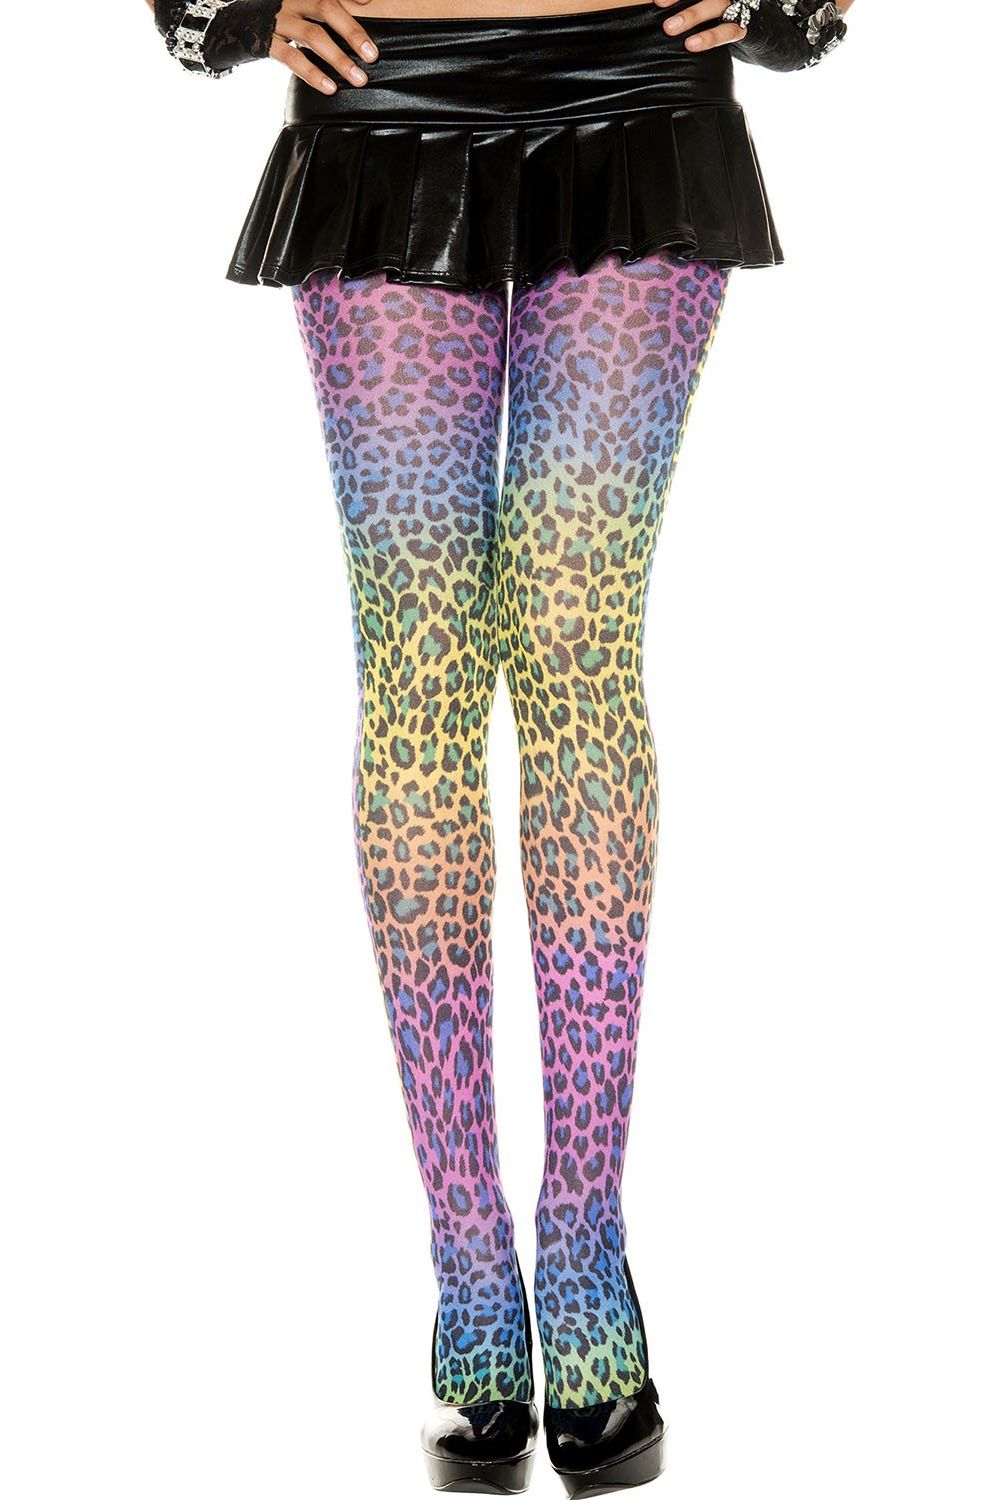 Rainbow Leopard Printed Tights Stockings